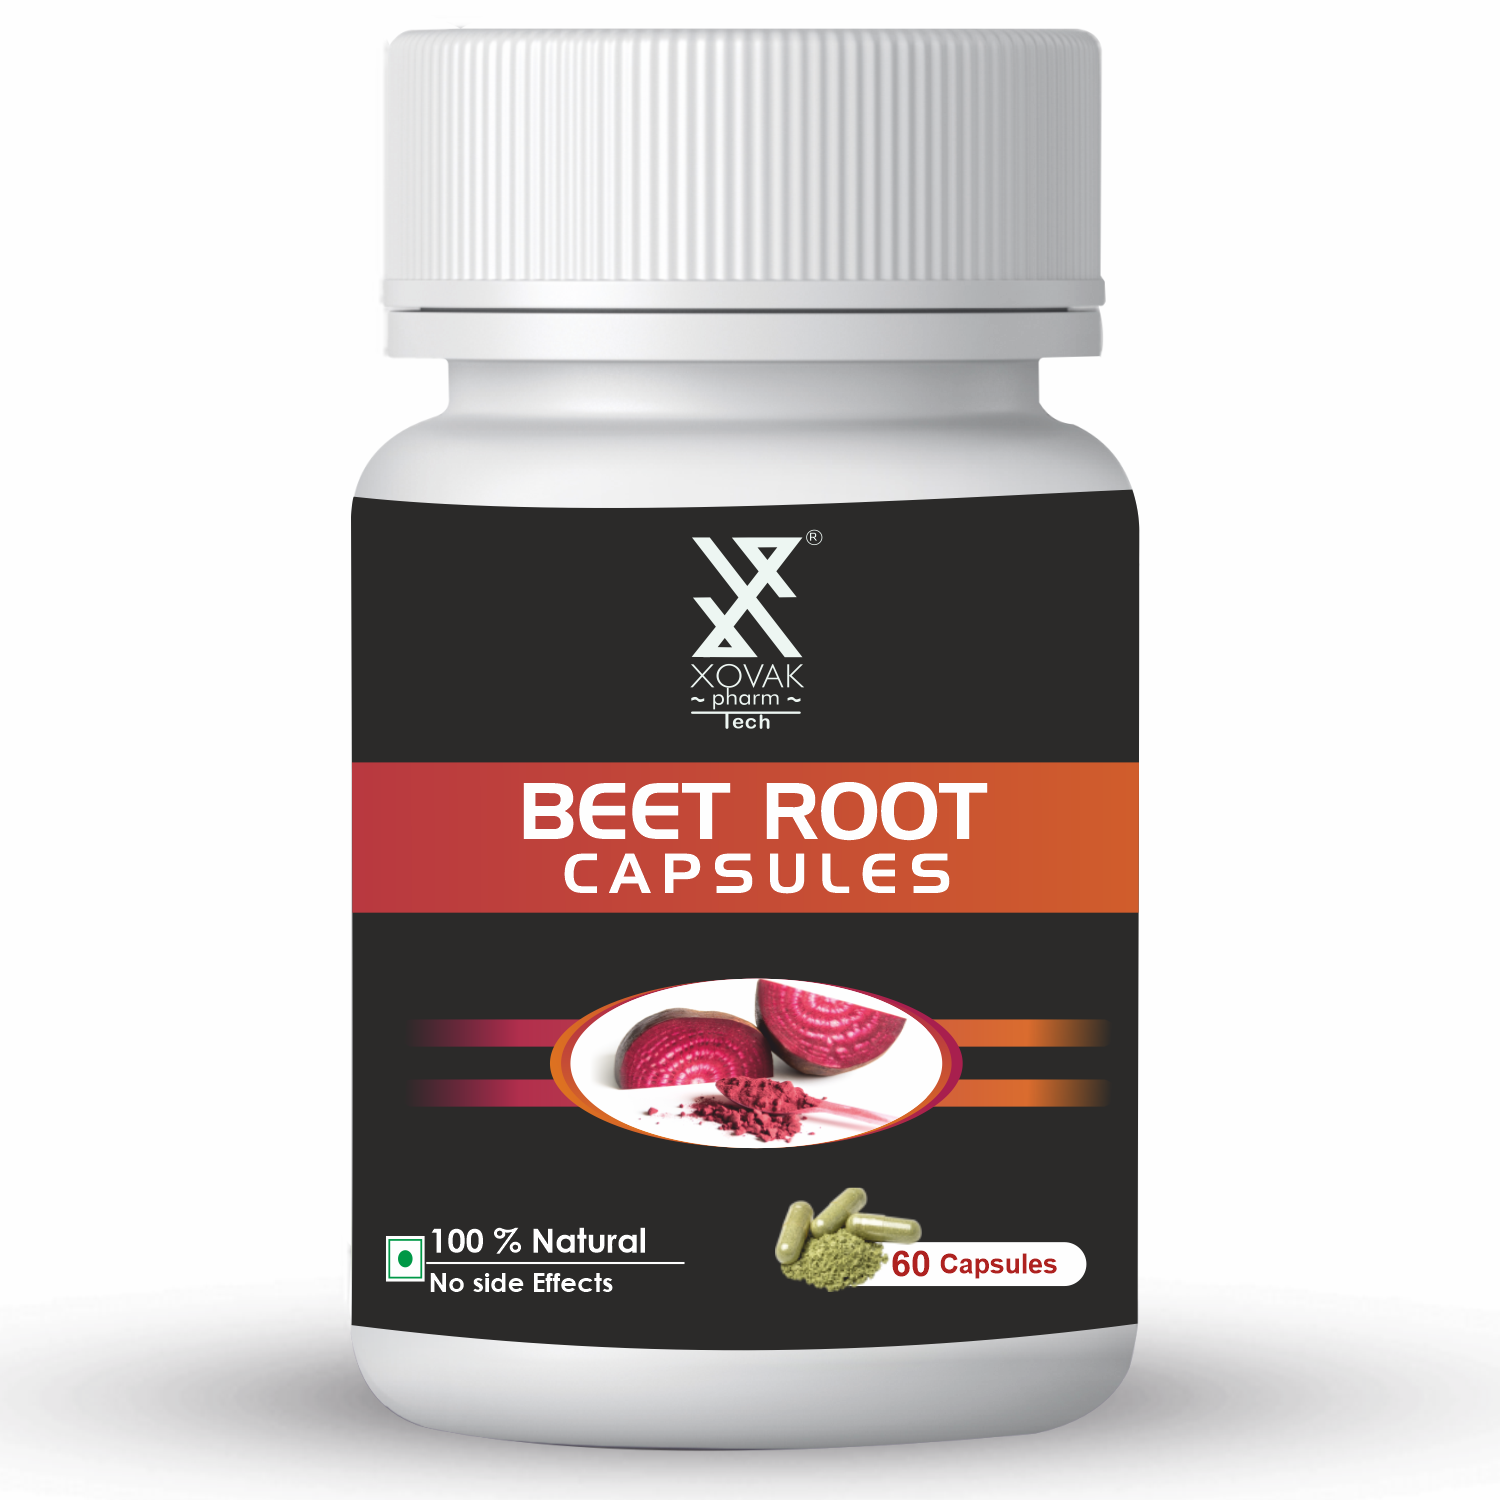 Buy Xovak Organic Beet Root Capsules (60caps) at Best Price Online